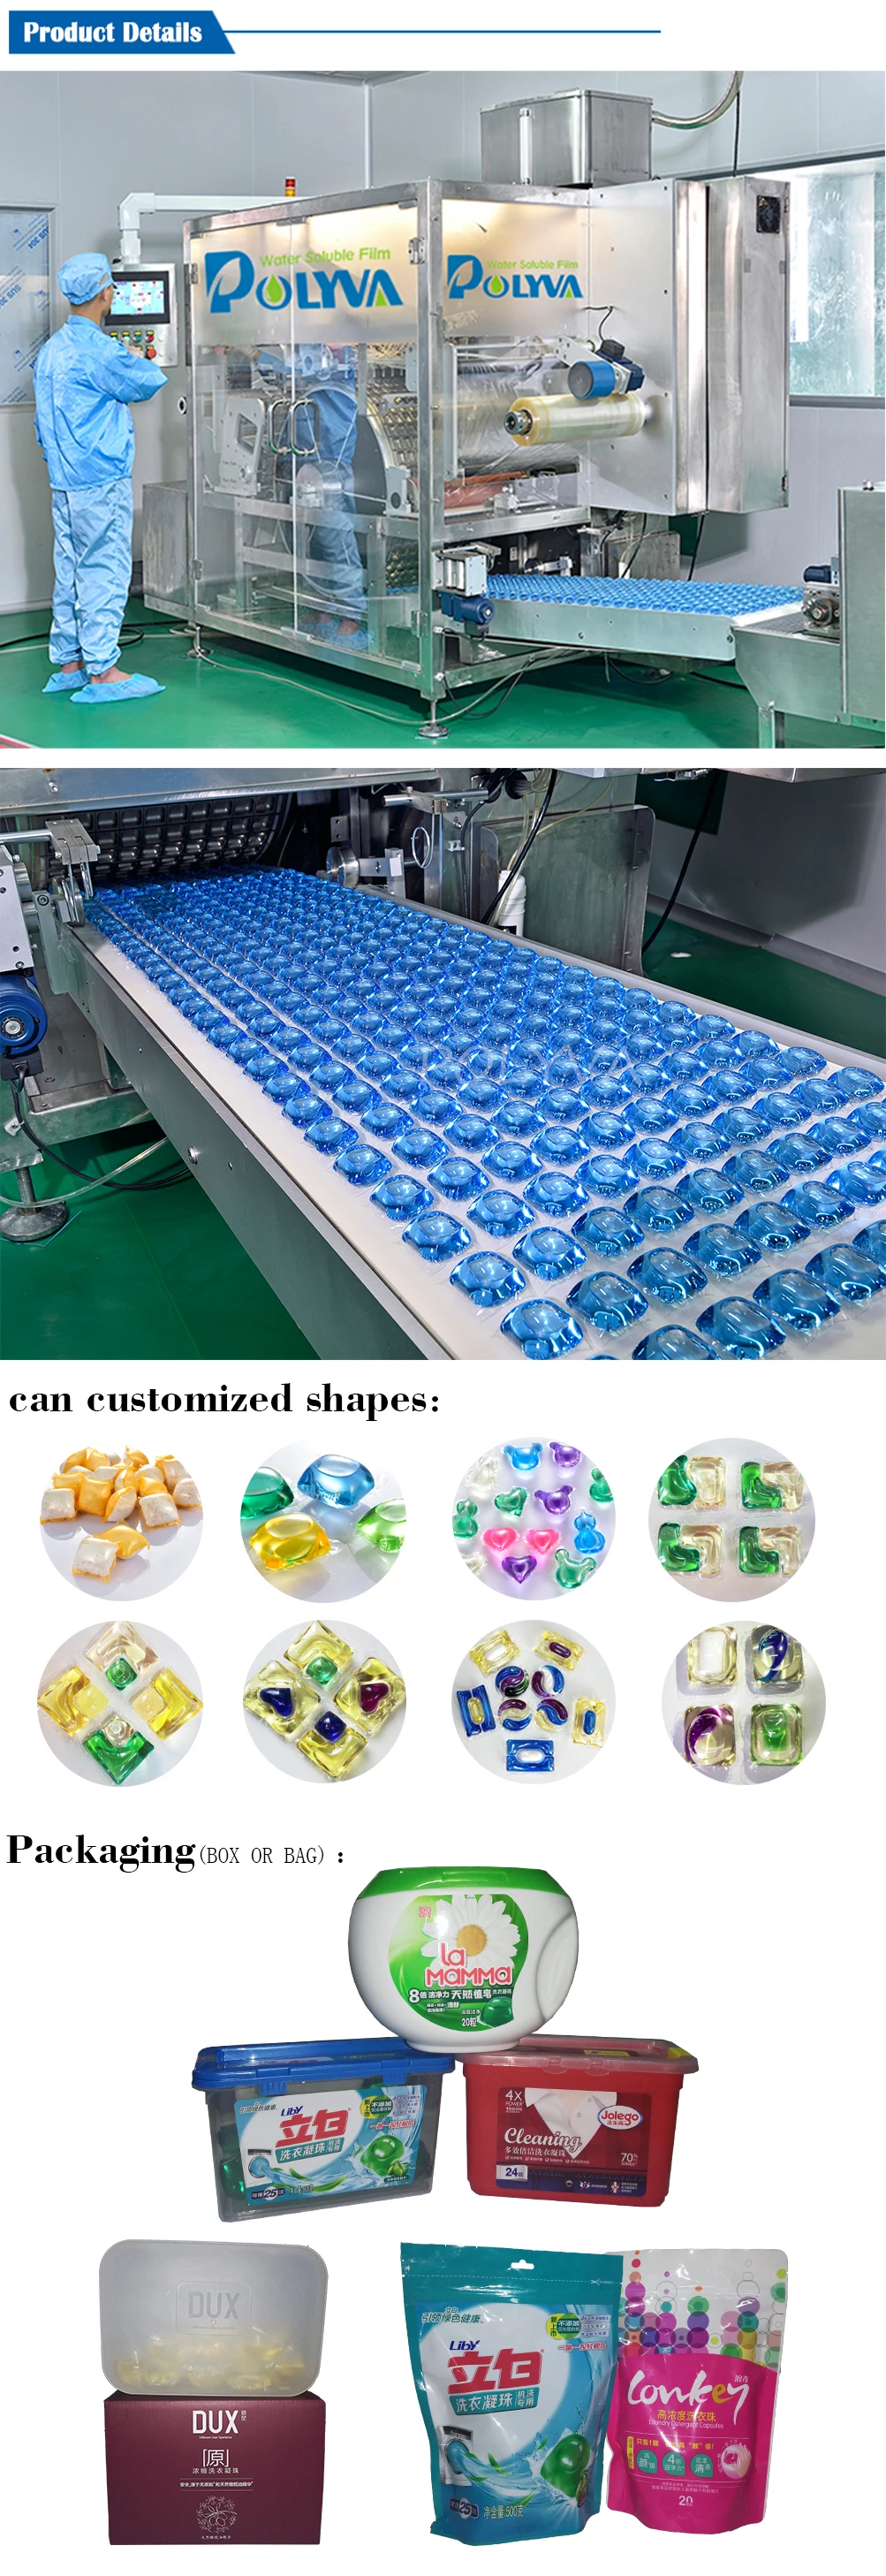 natural environmentally friendly laundry liquid detergent gel beads